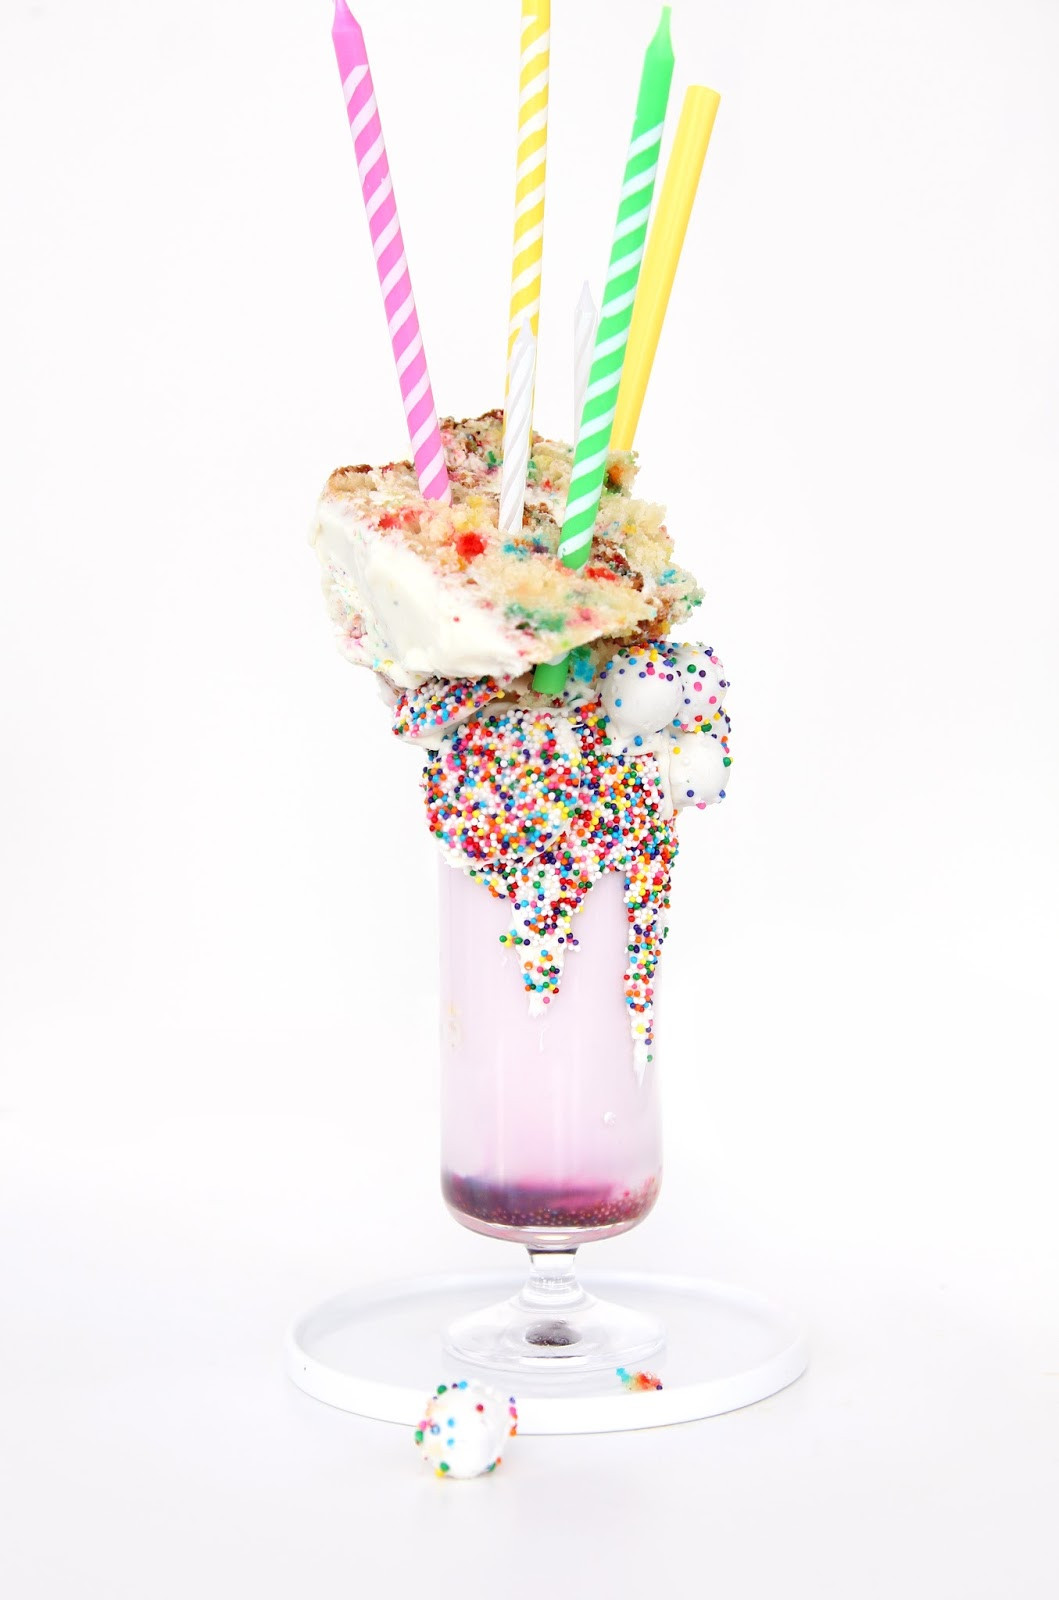 Best ideas about Birthday Cake Milkshake
. Save or Pin 20 Extreme Milkshakes NoBiggie Now.